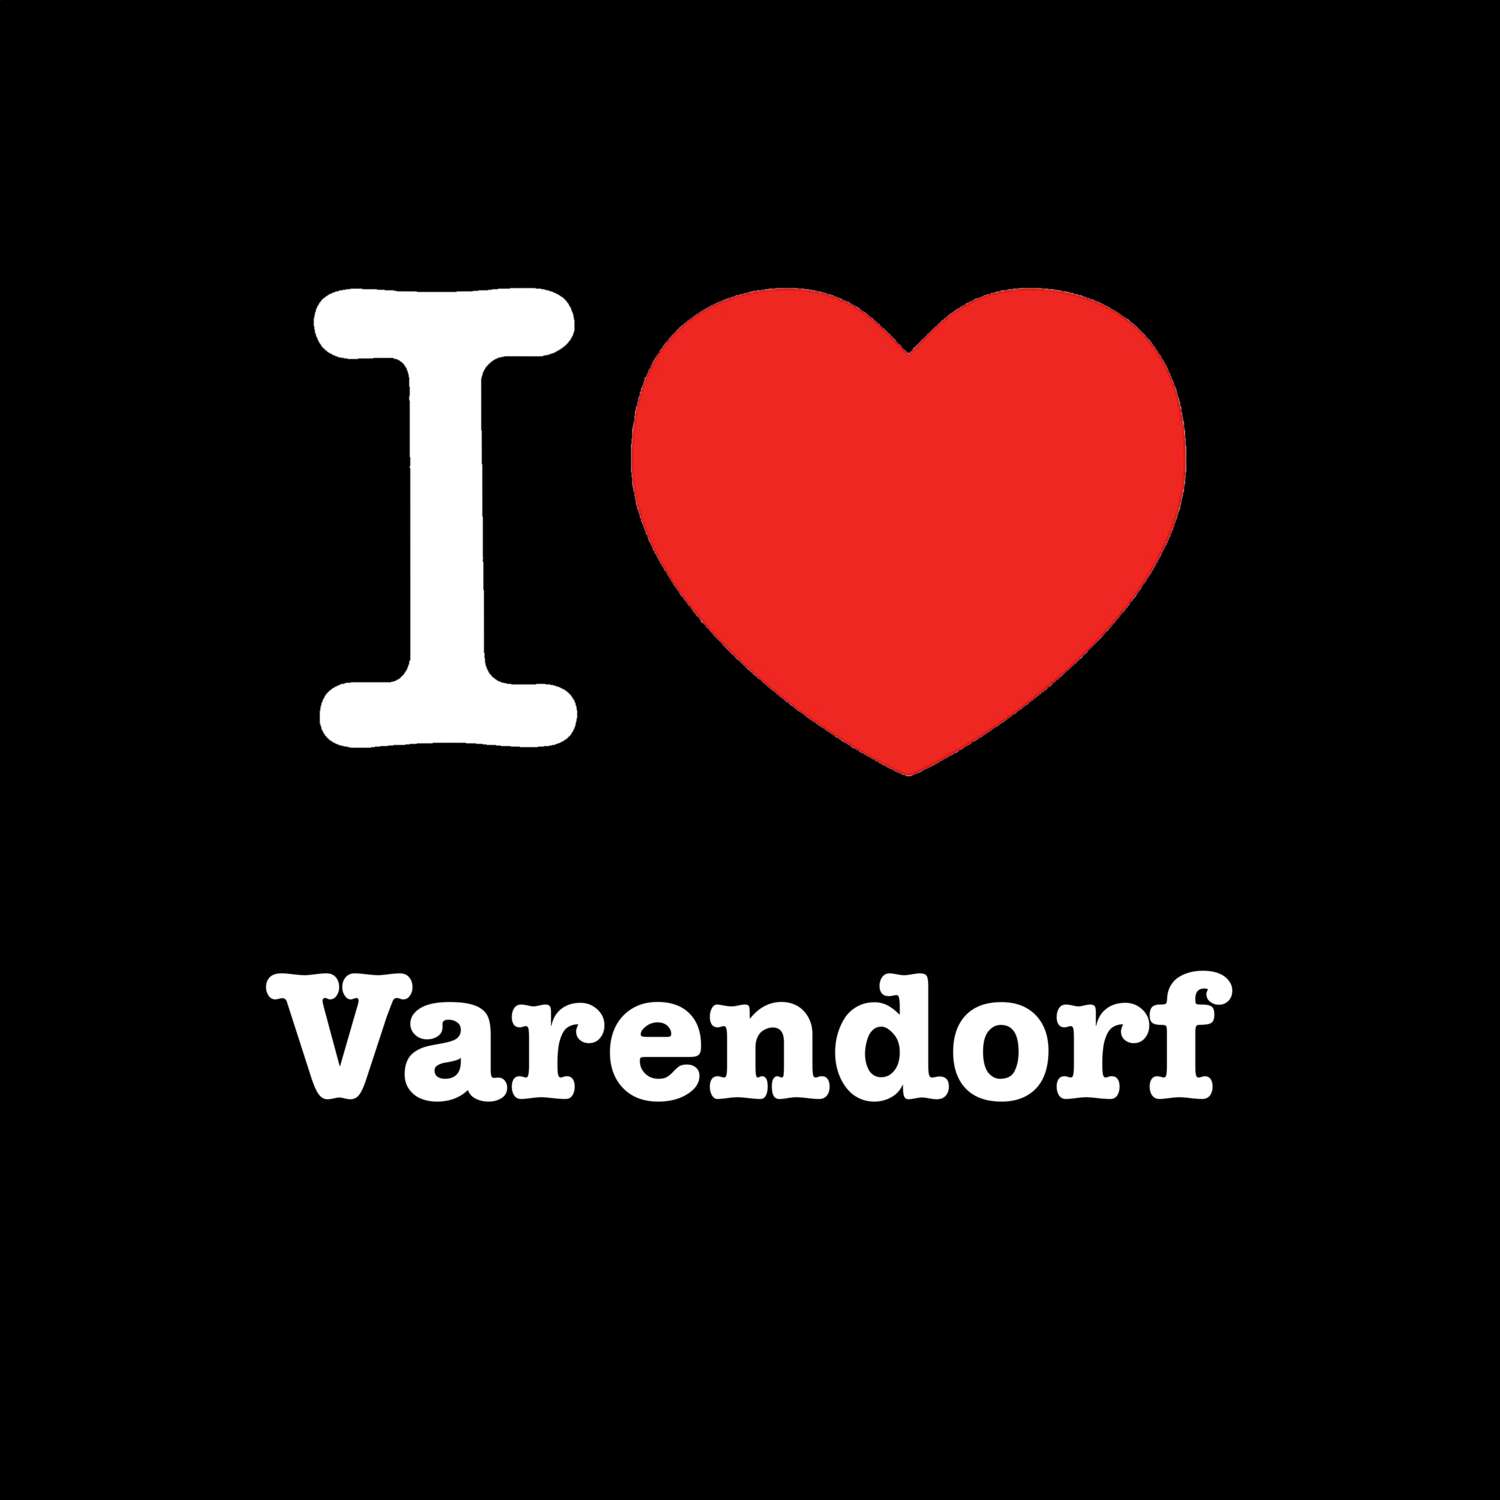 Varendorf T-Shirt »I love«